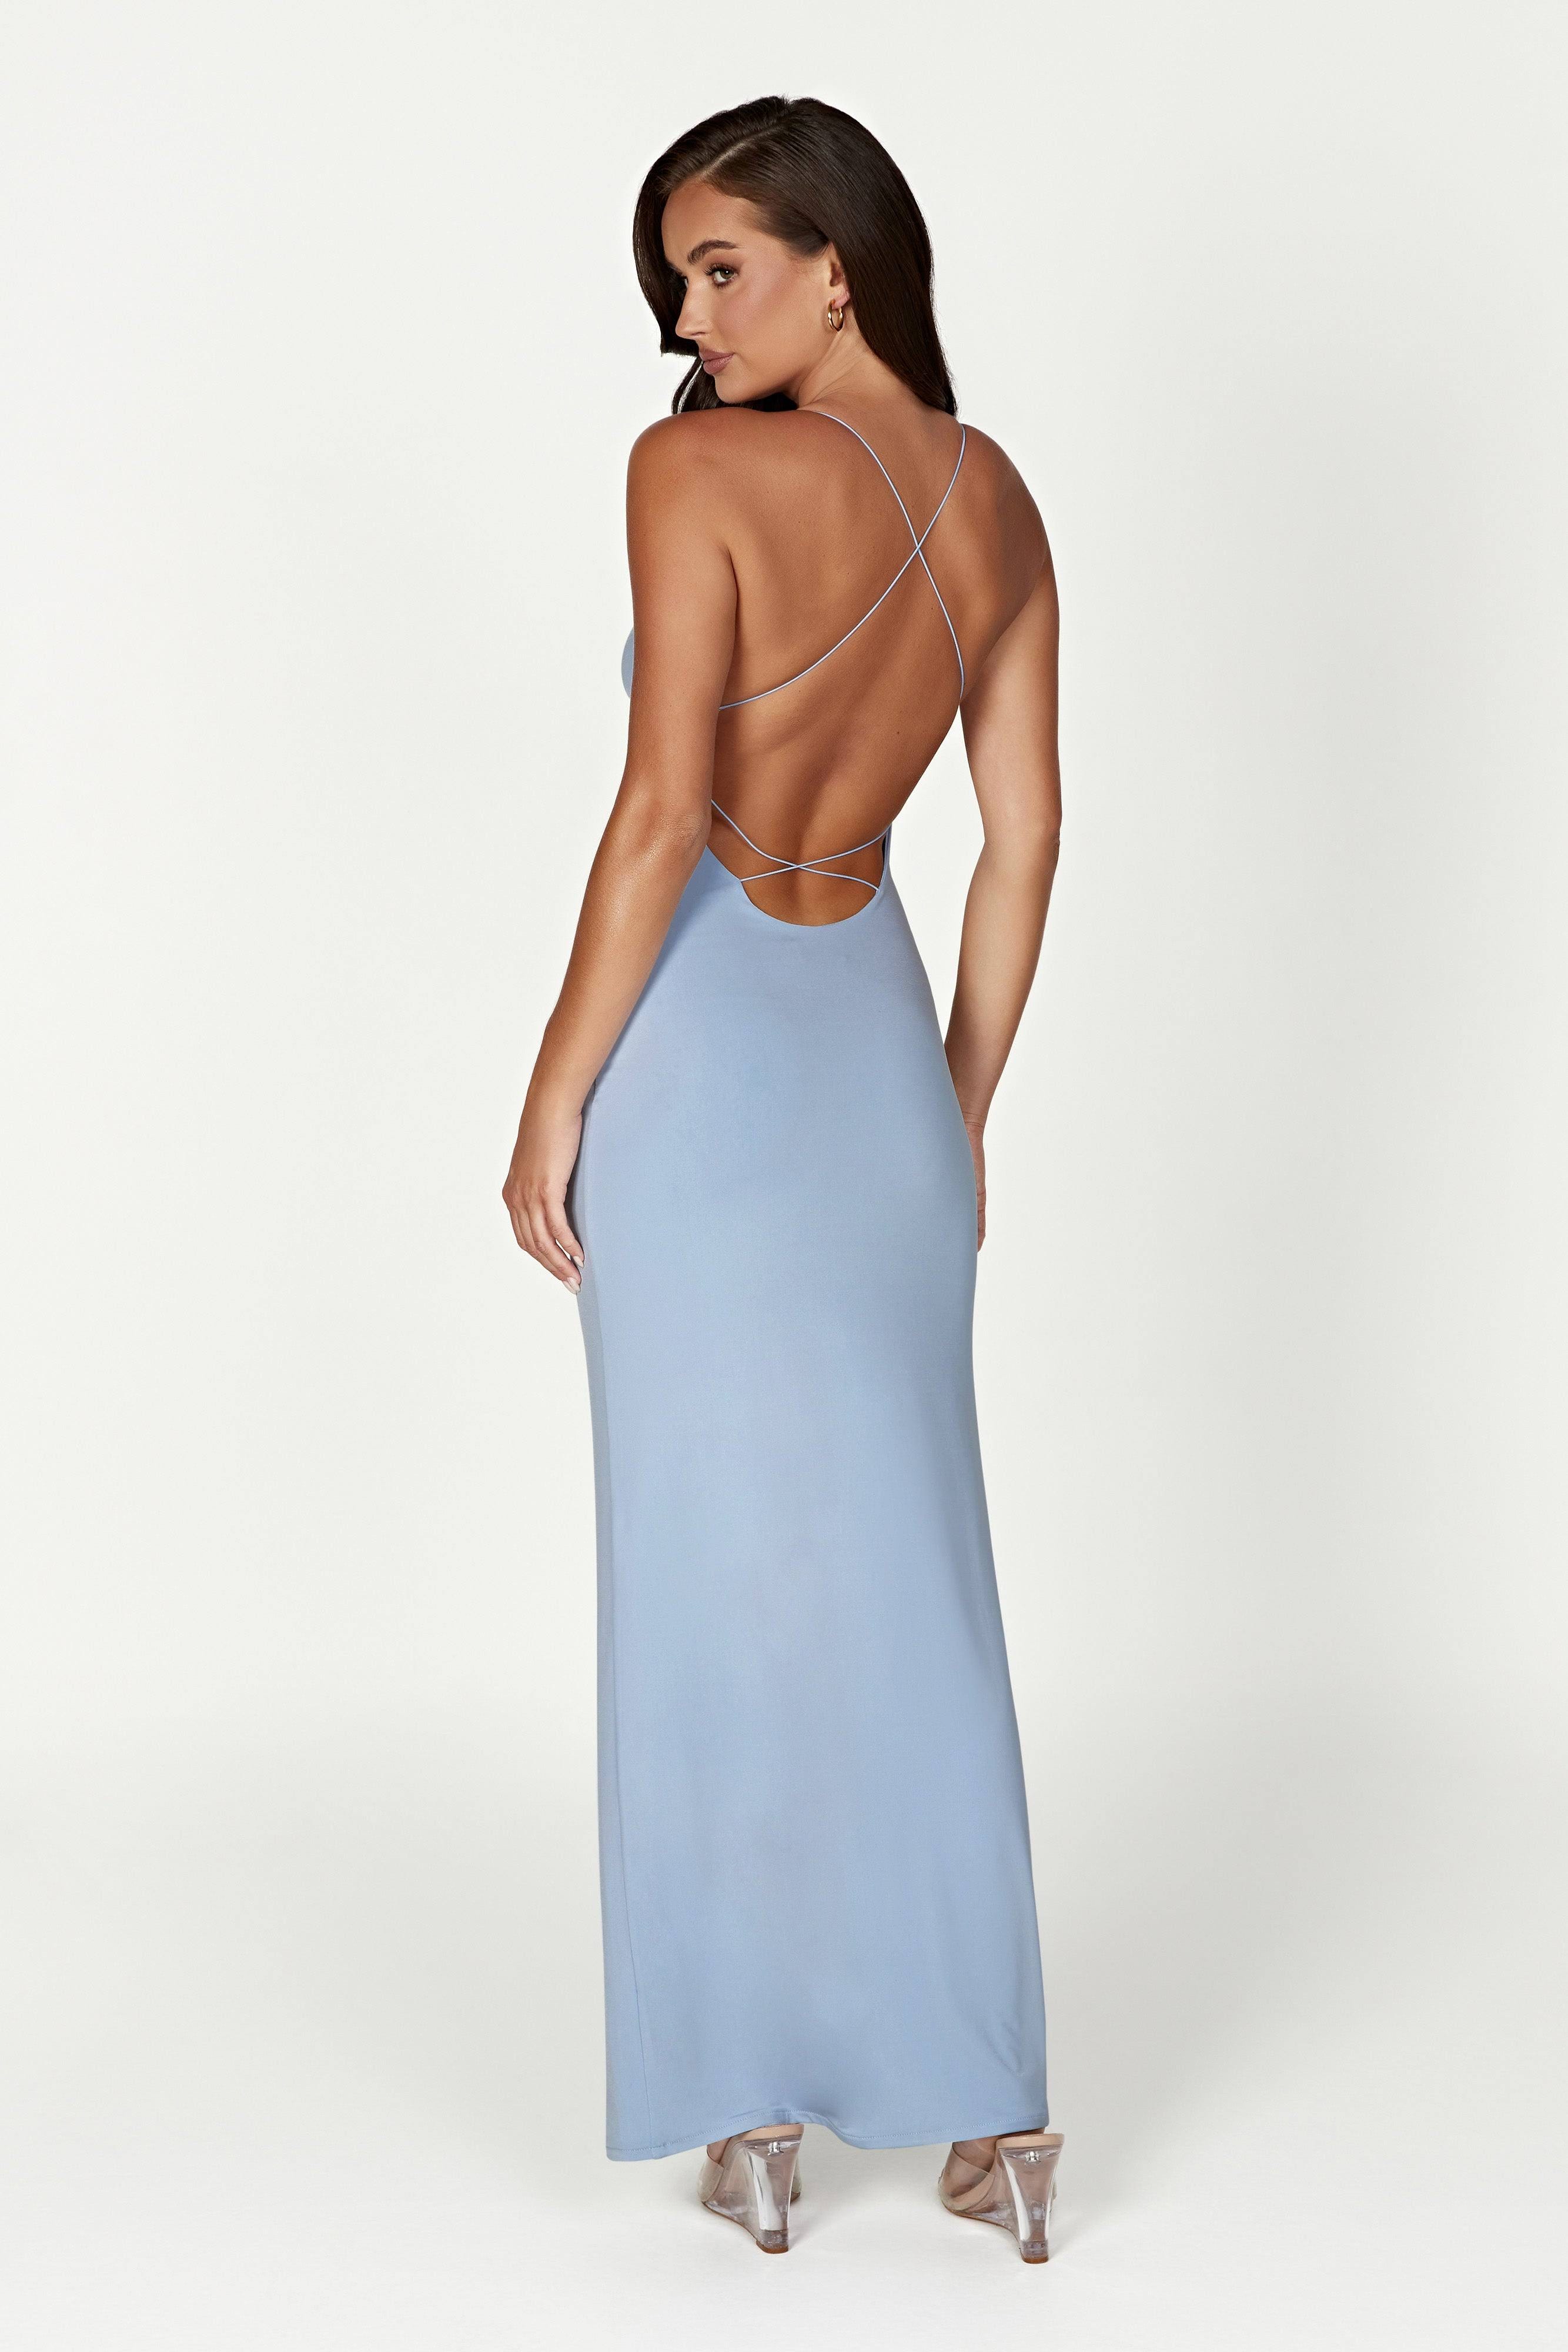 Sinead Twist Maxi Dress - Powder Blue - Perfect for Birthdays | Image